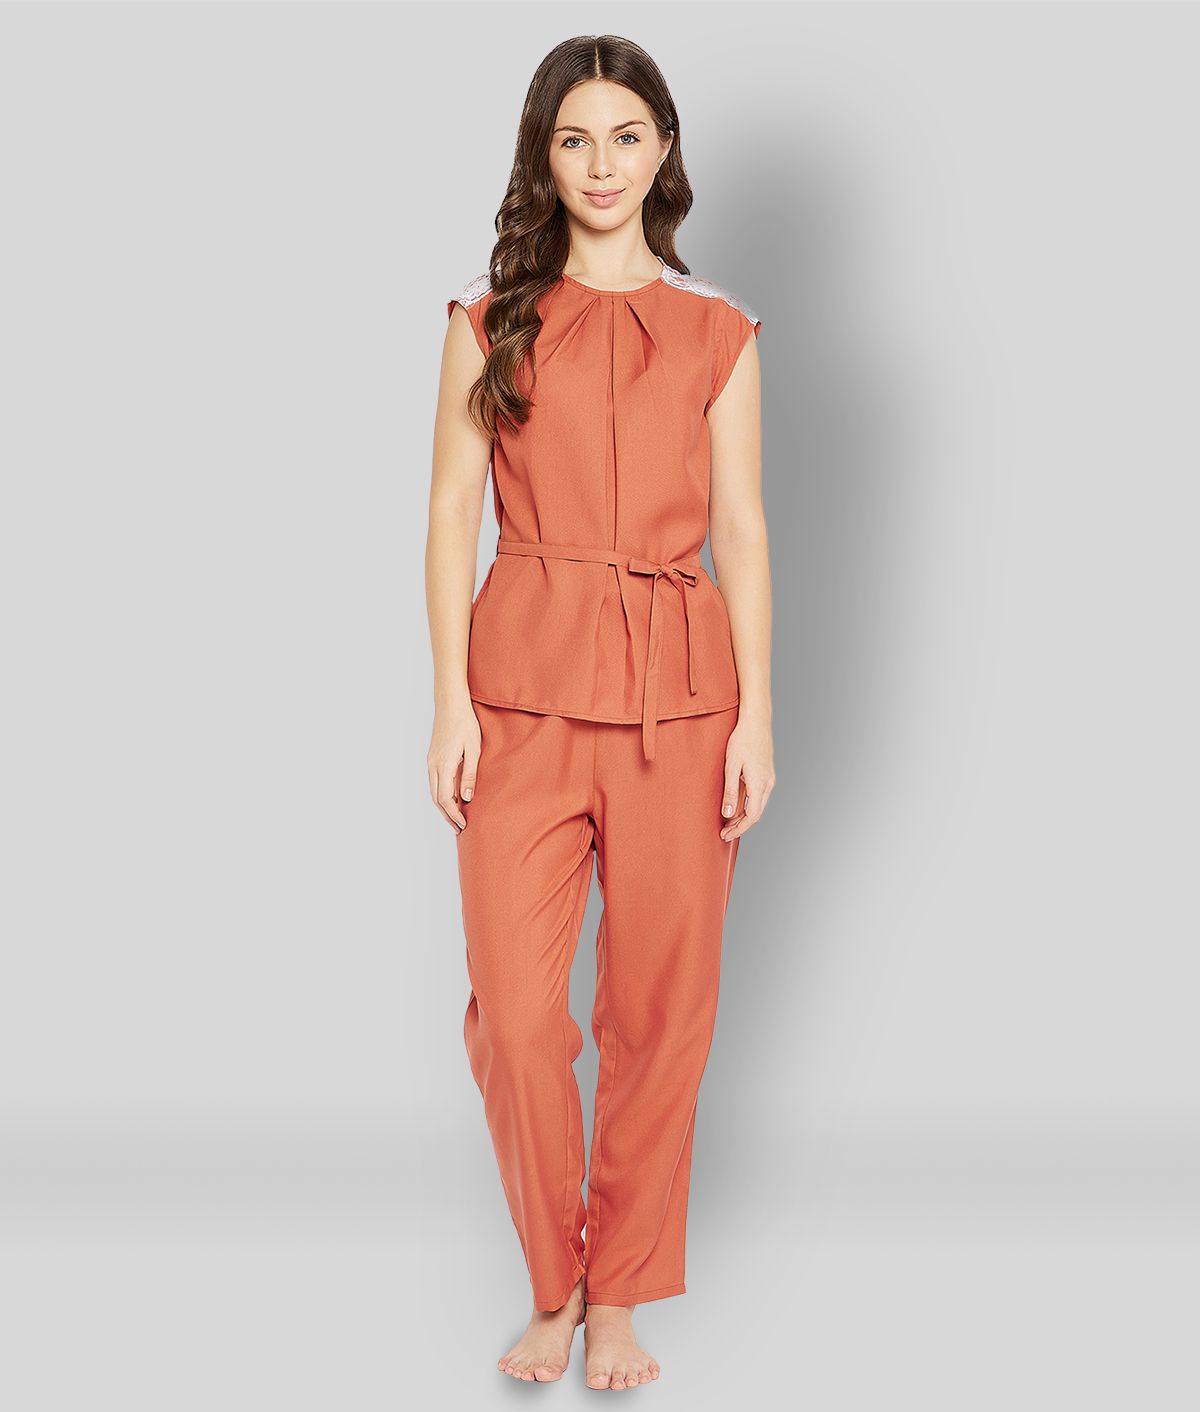     			Clovia - Orange Rayon Women's Nightwear Nightsuit Sets ( Pack of 2 )